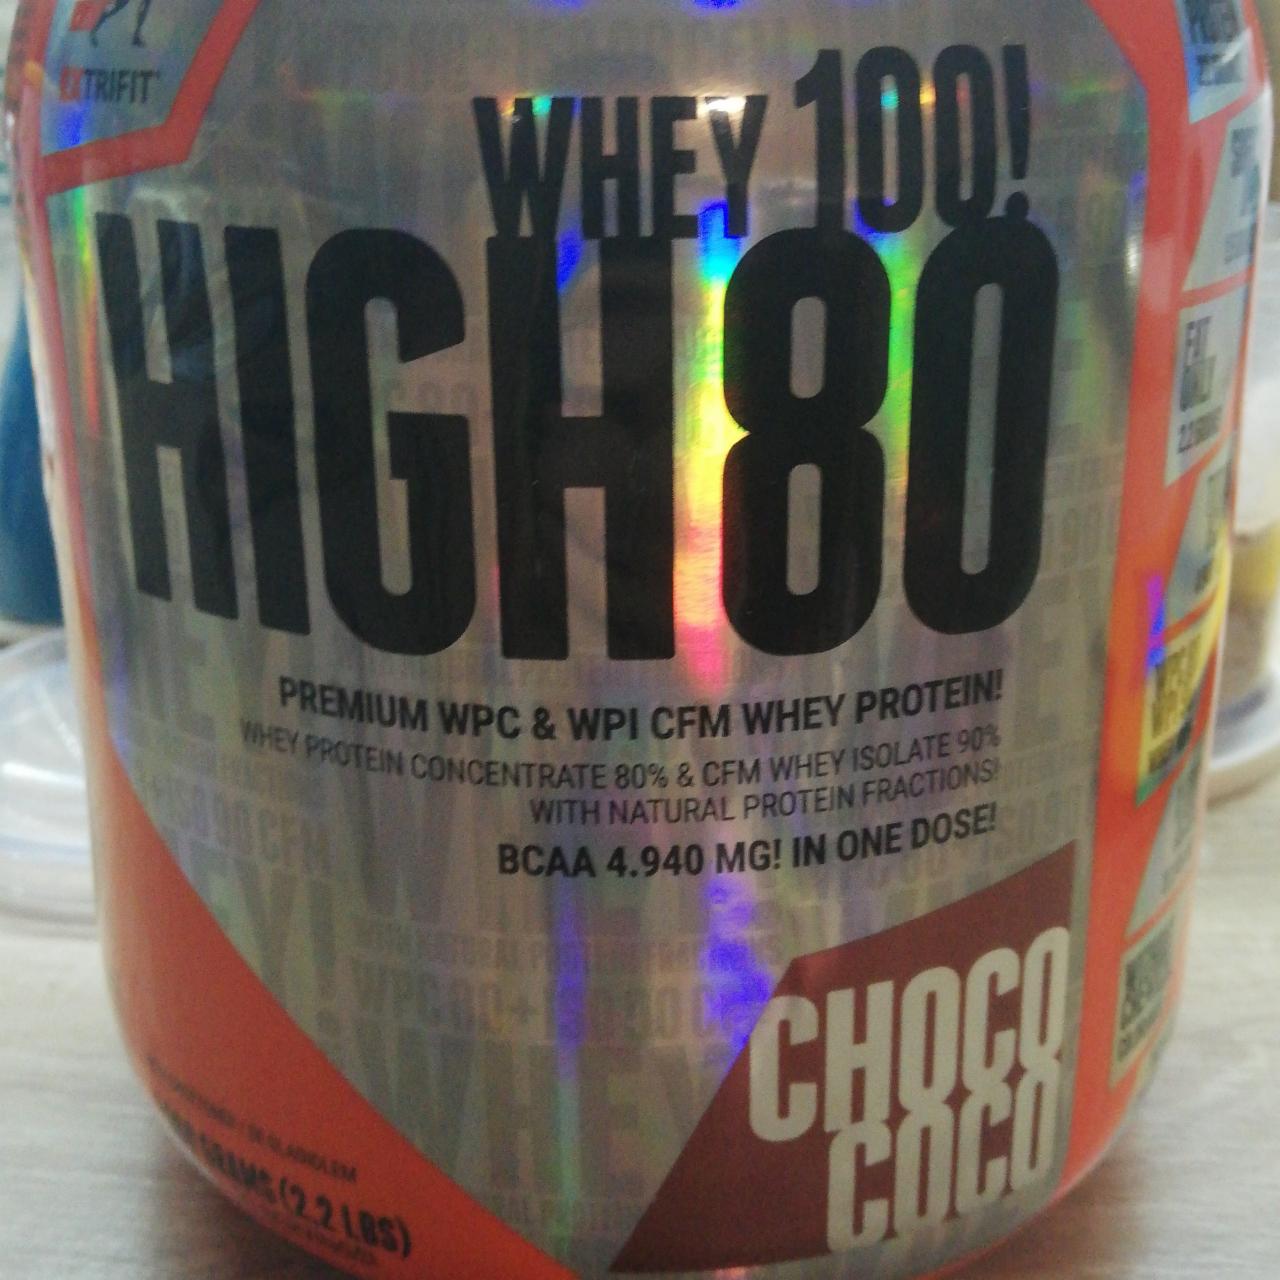 Fotografie - Whey 100! High 80 Choco-Coco Extrifit